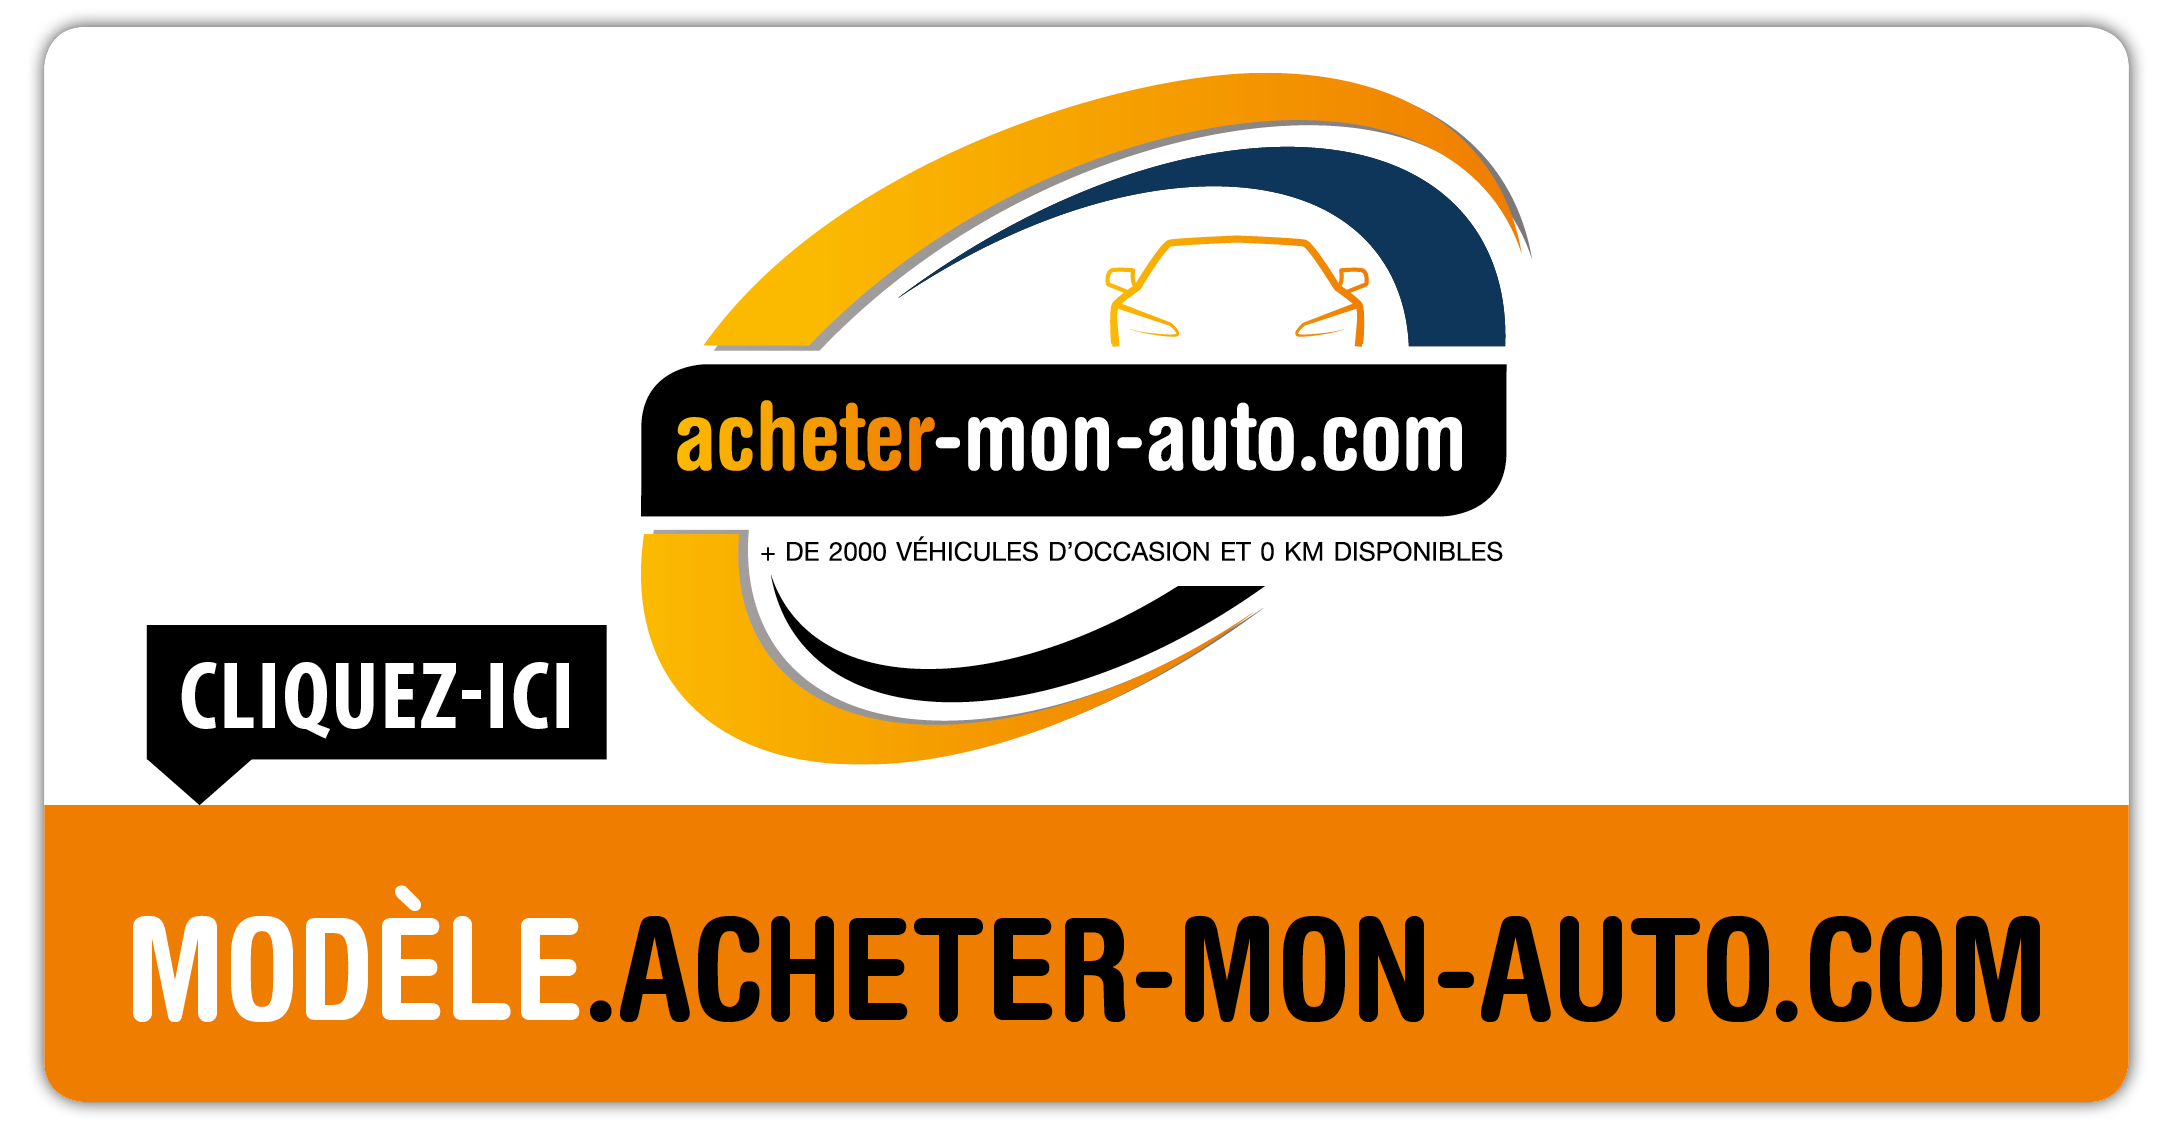 Collection 3 - Acheter Mon Auto